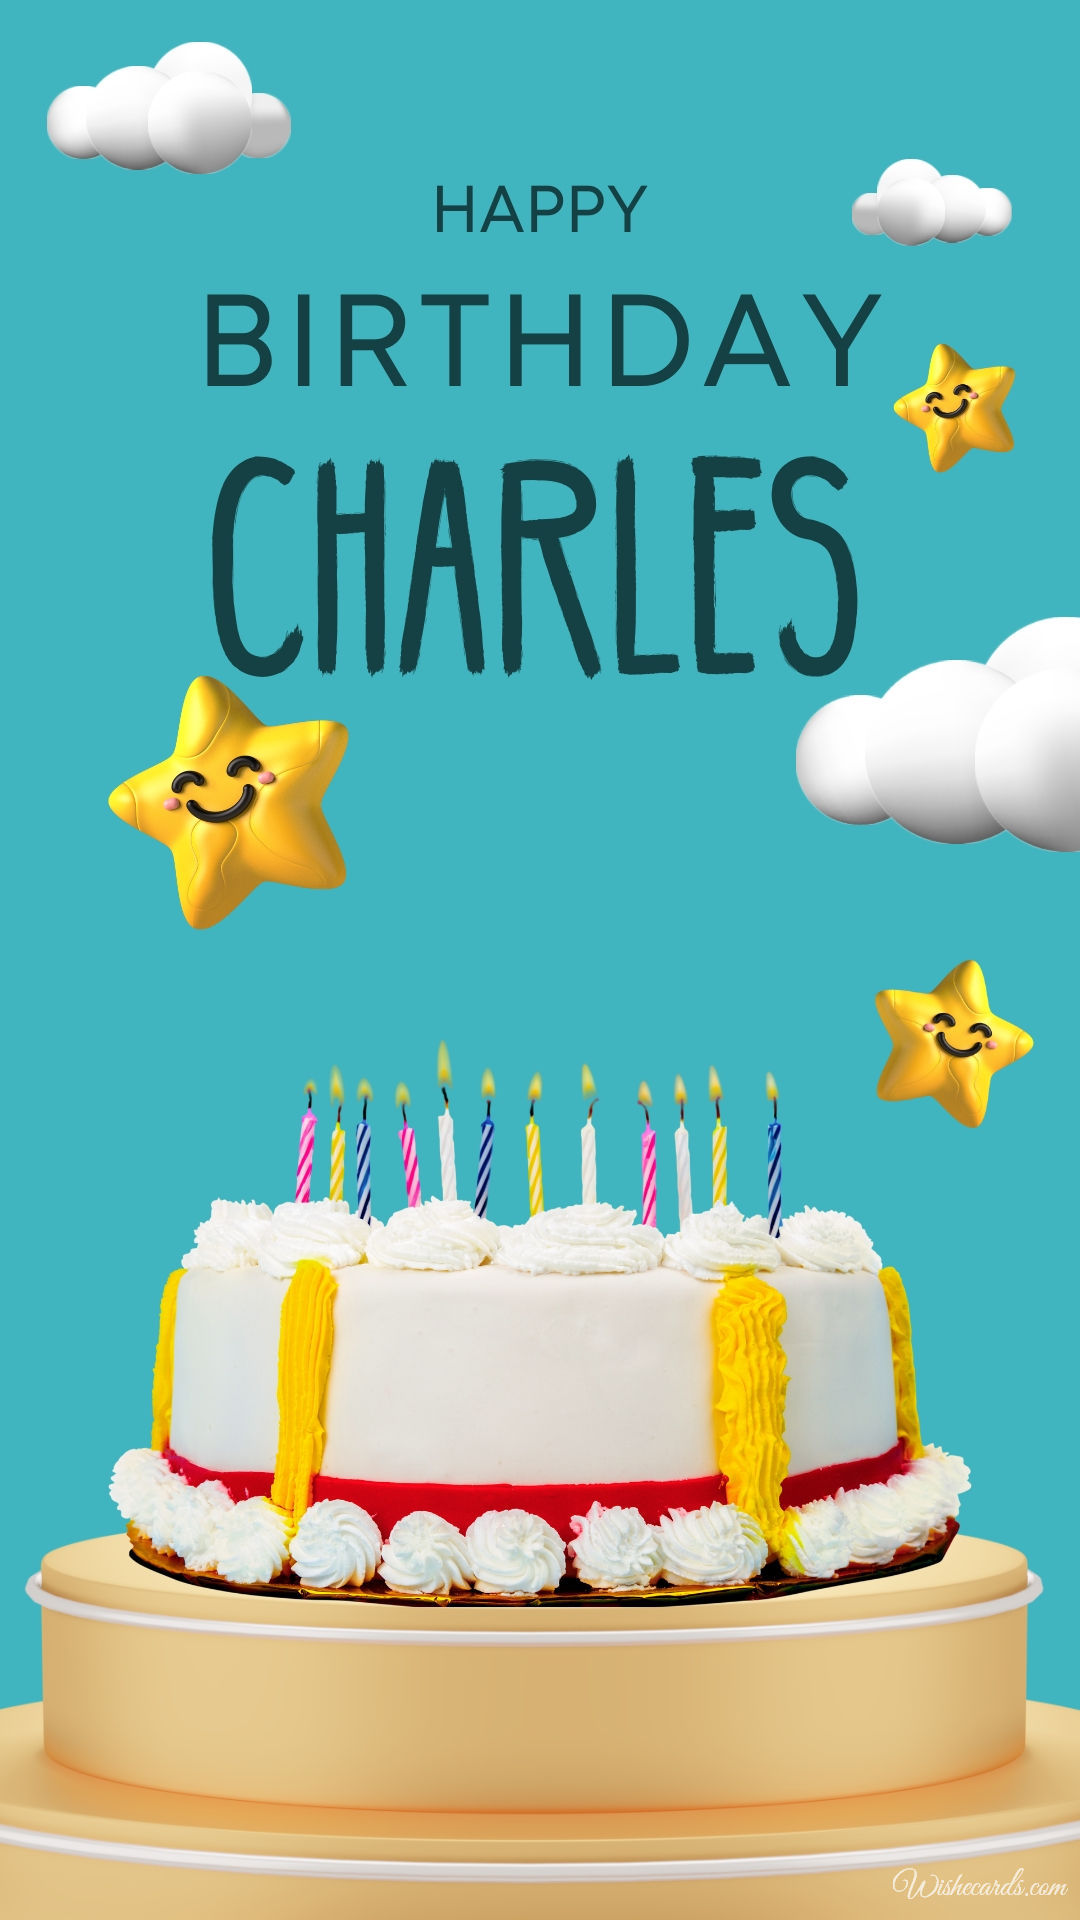 Happy Birthday to Charles